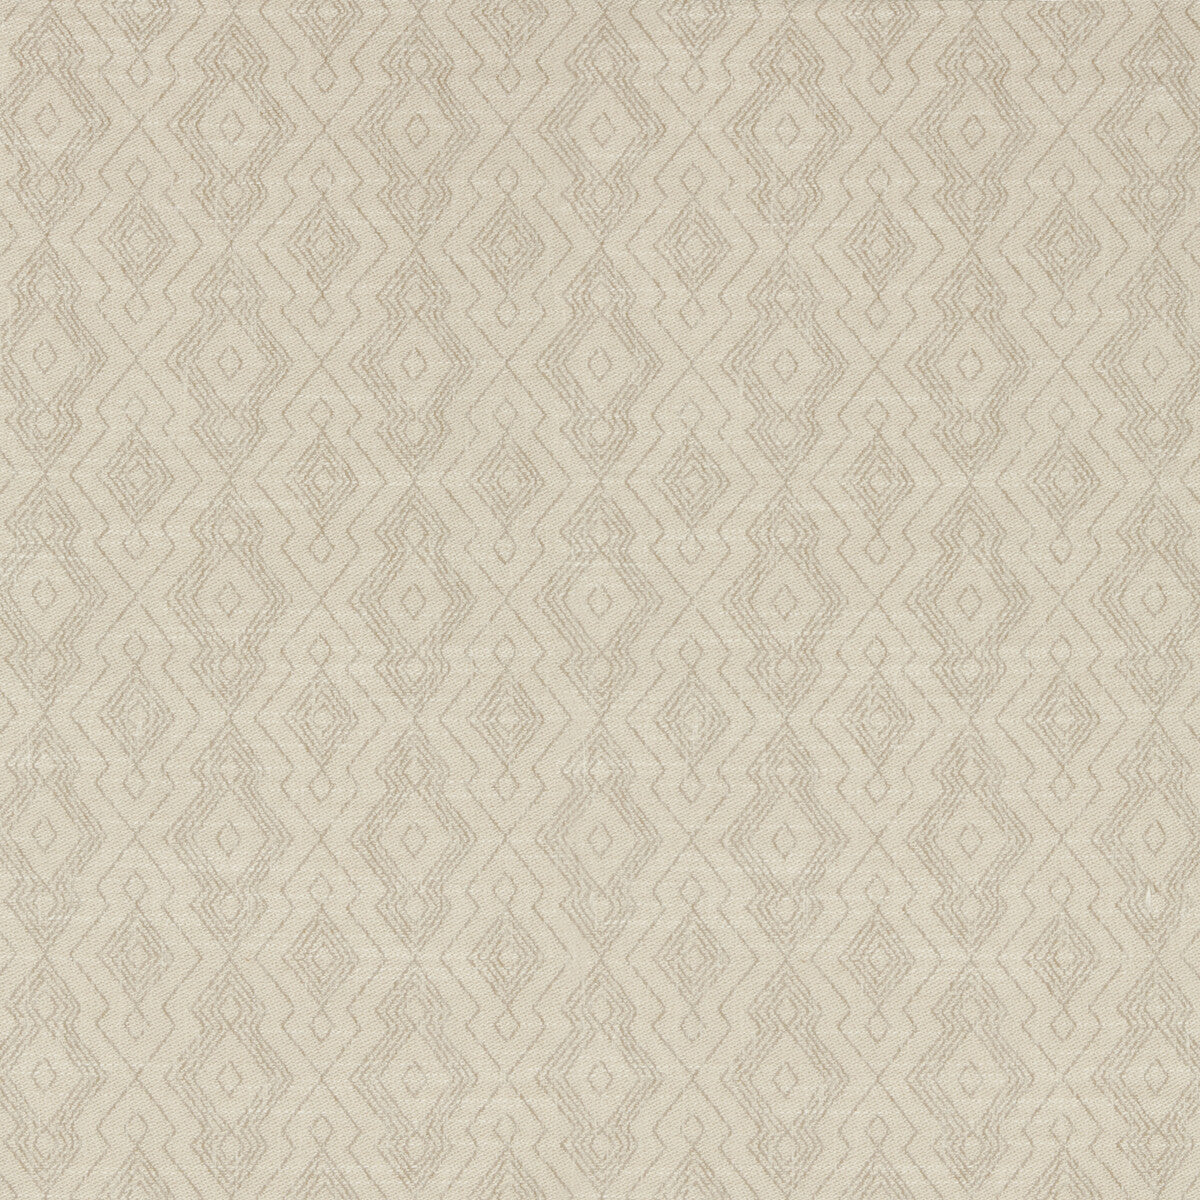 Kravet Smart fabric in 35335-16 color - pattern 35335.16.0 - by Kravet Smart in the Performance Kravetarmor collection